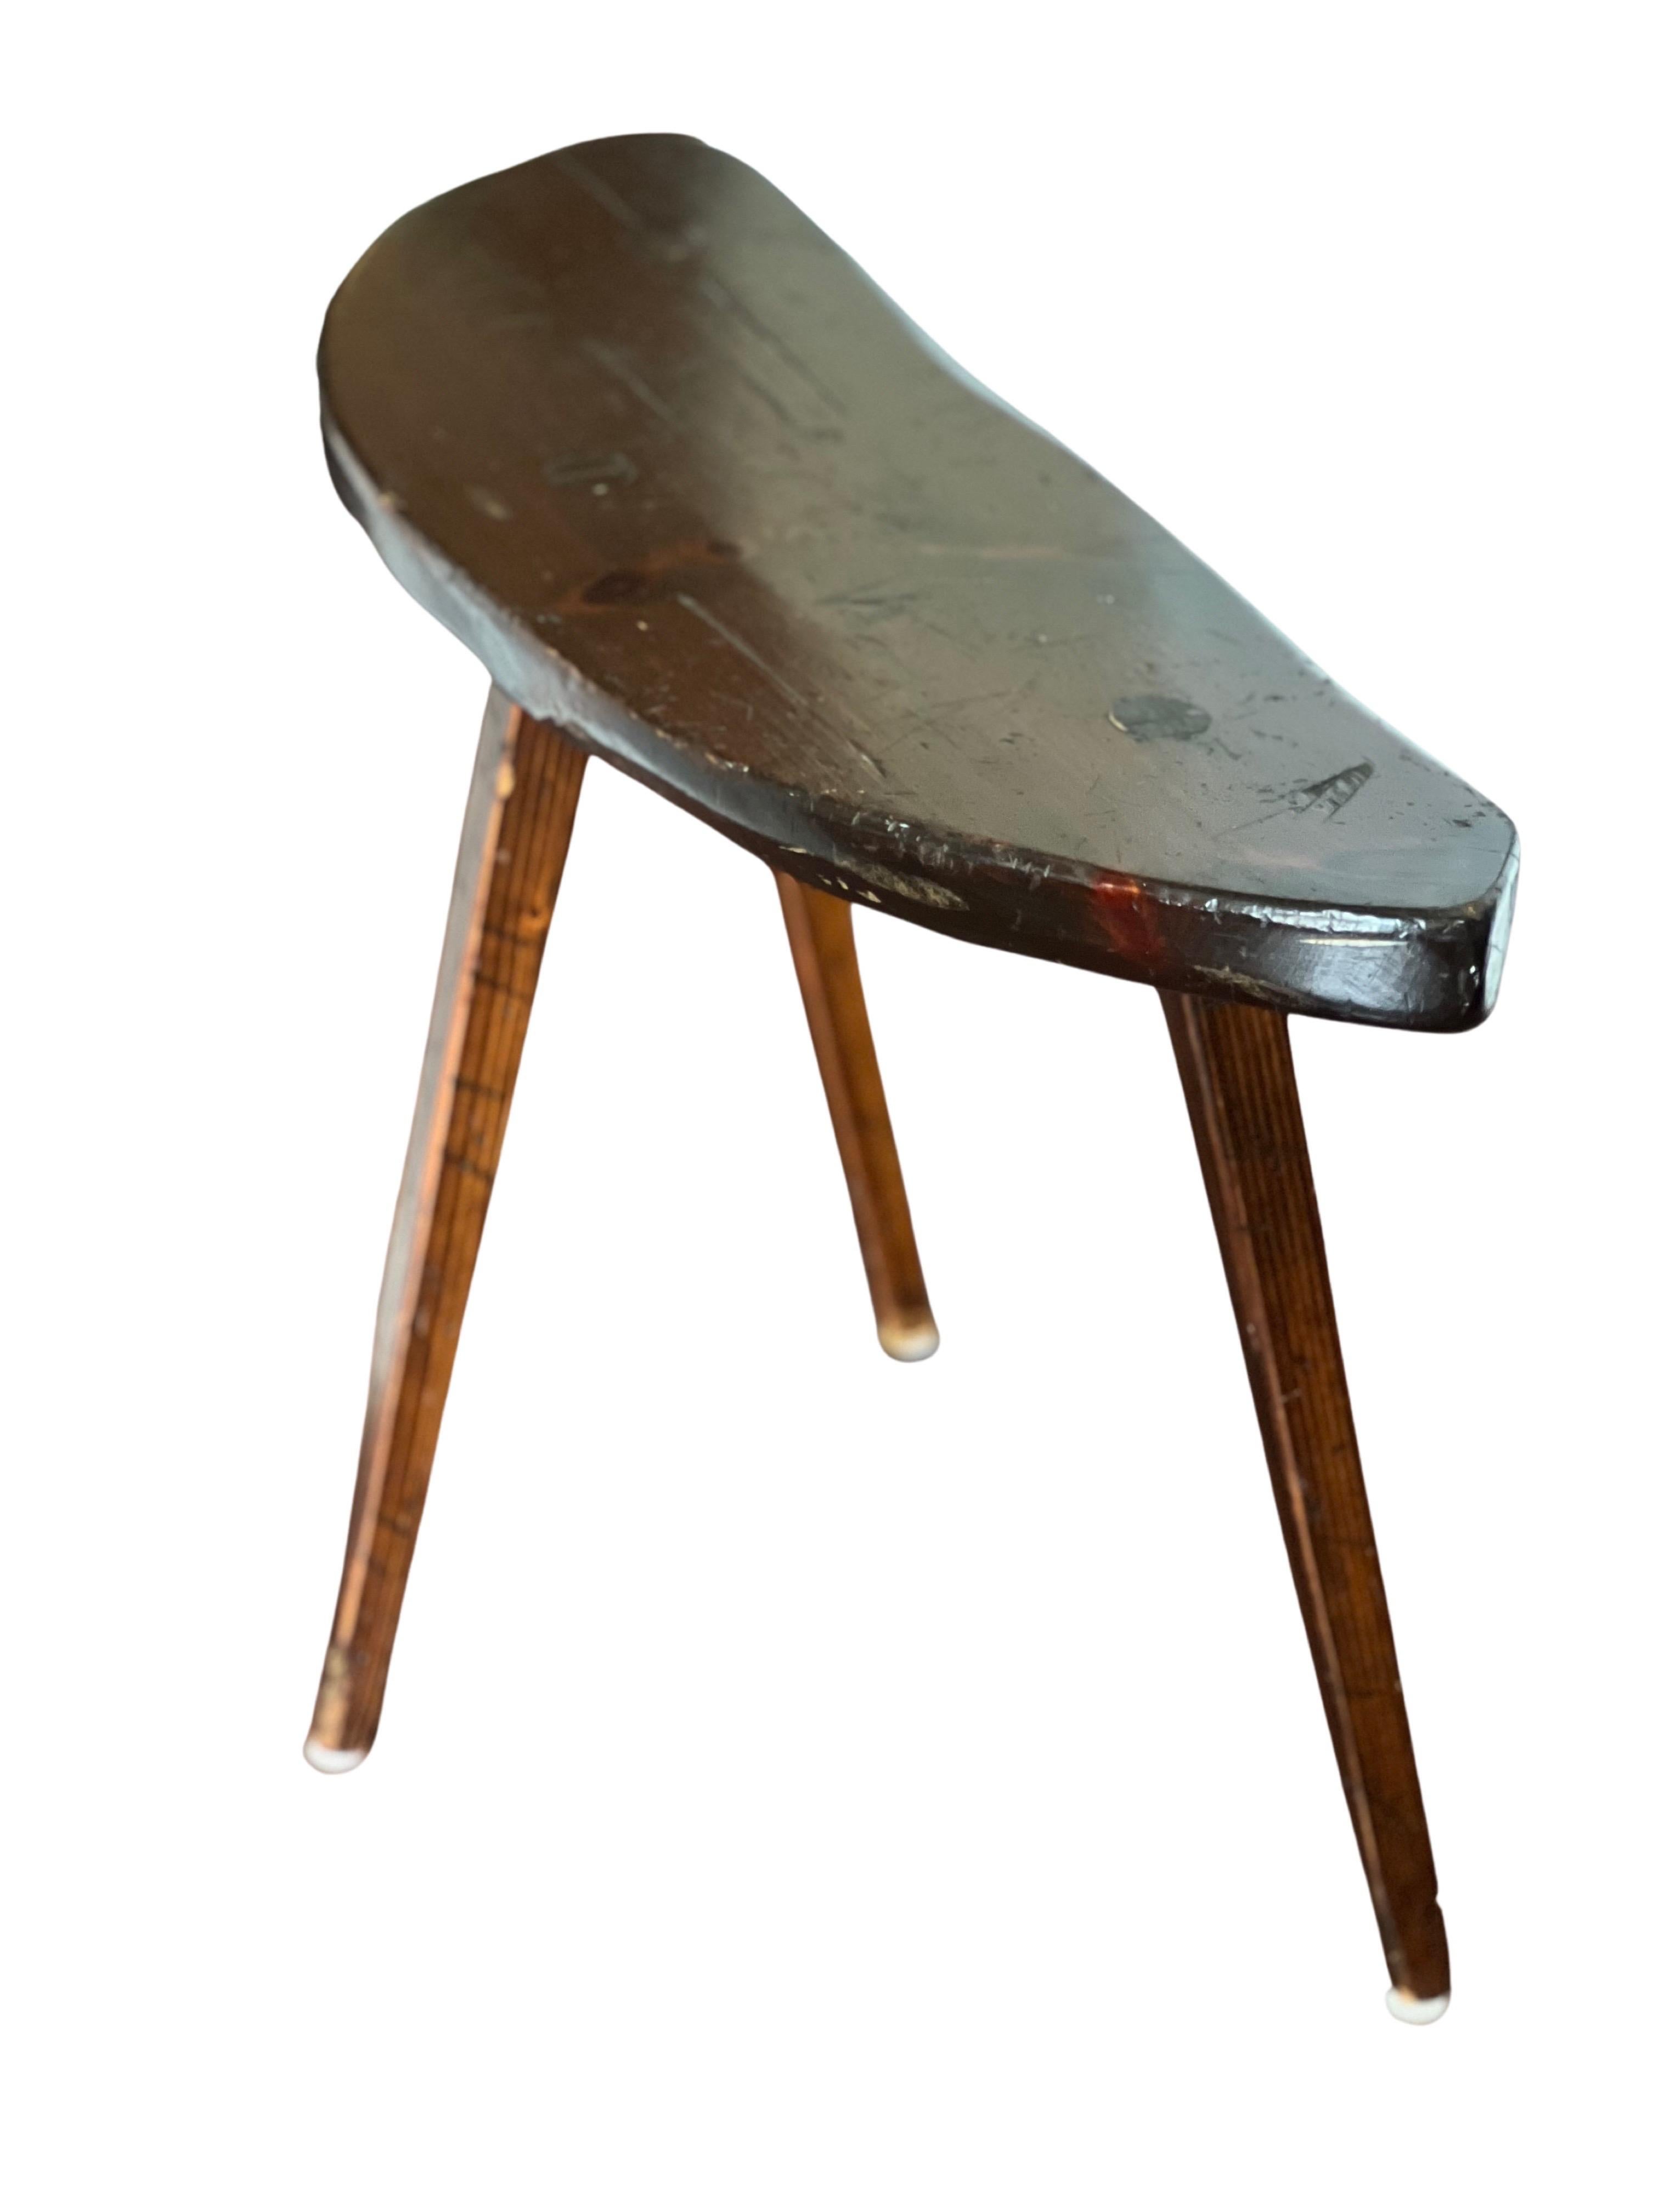 19th Century Antique Primitive, Rustic Organic Form Live Edge Side Table For Sale